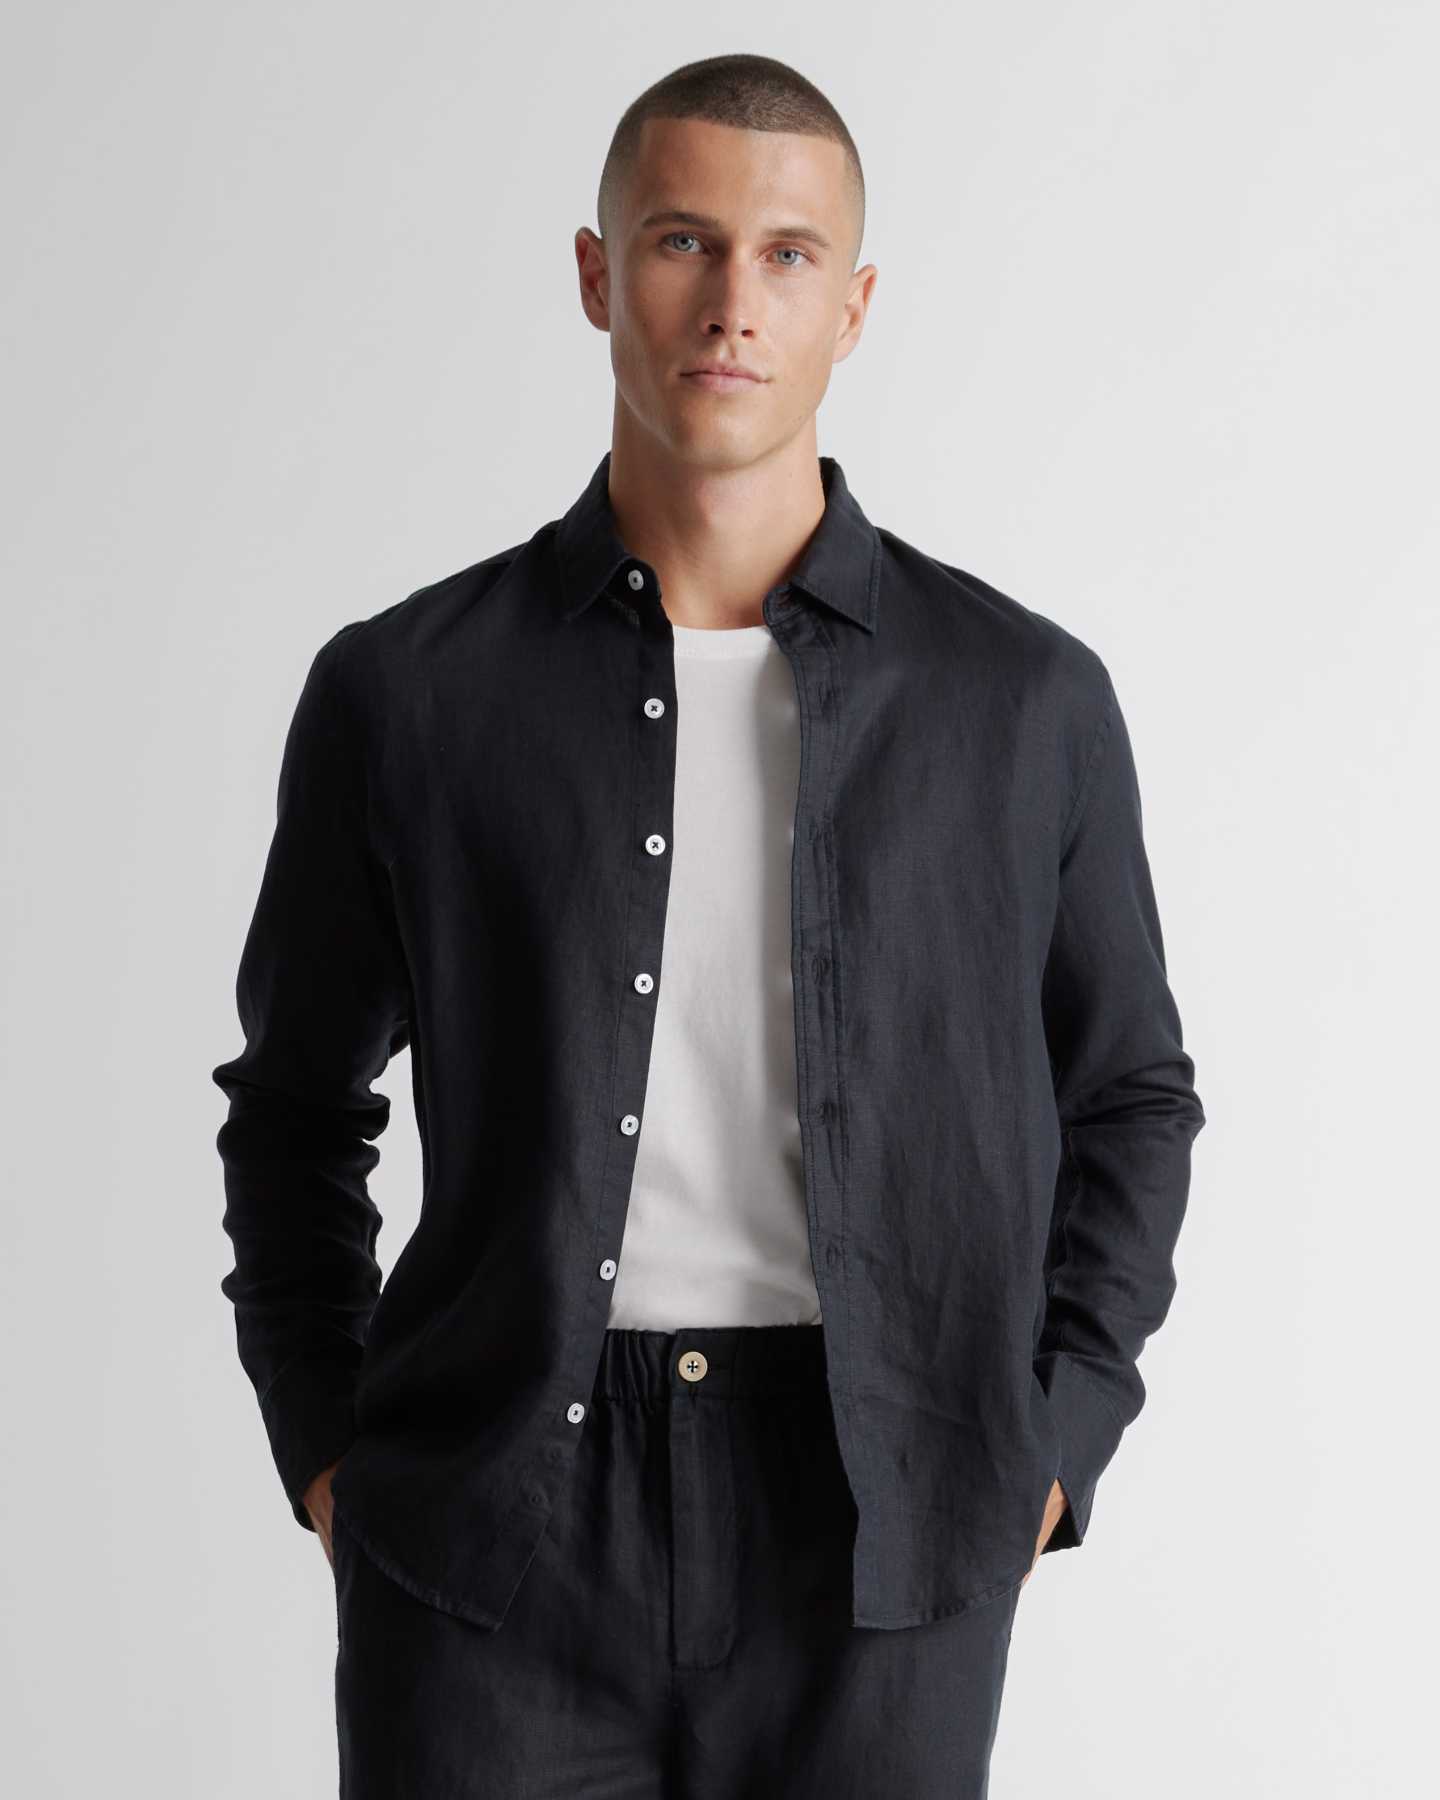 You May Also Like - 100% European Linen Long Sleeve Shirt - Black